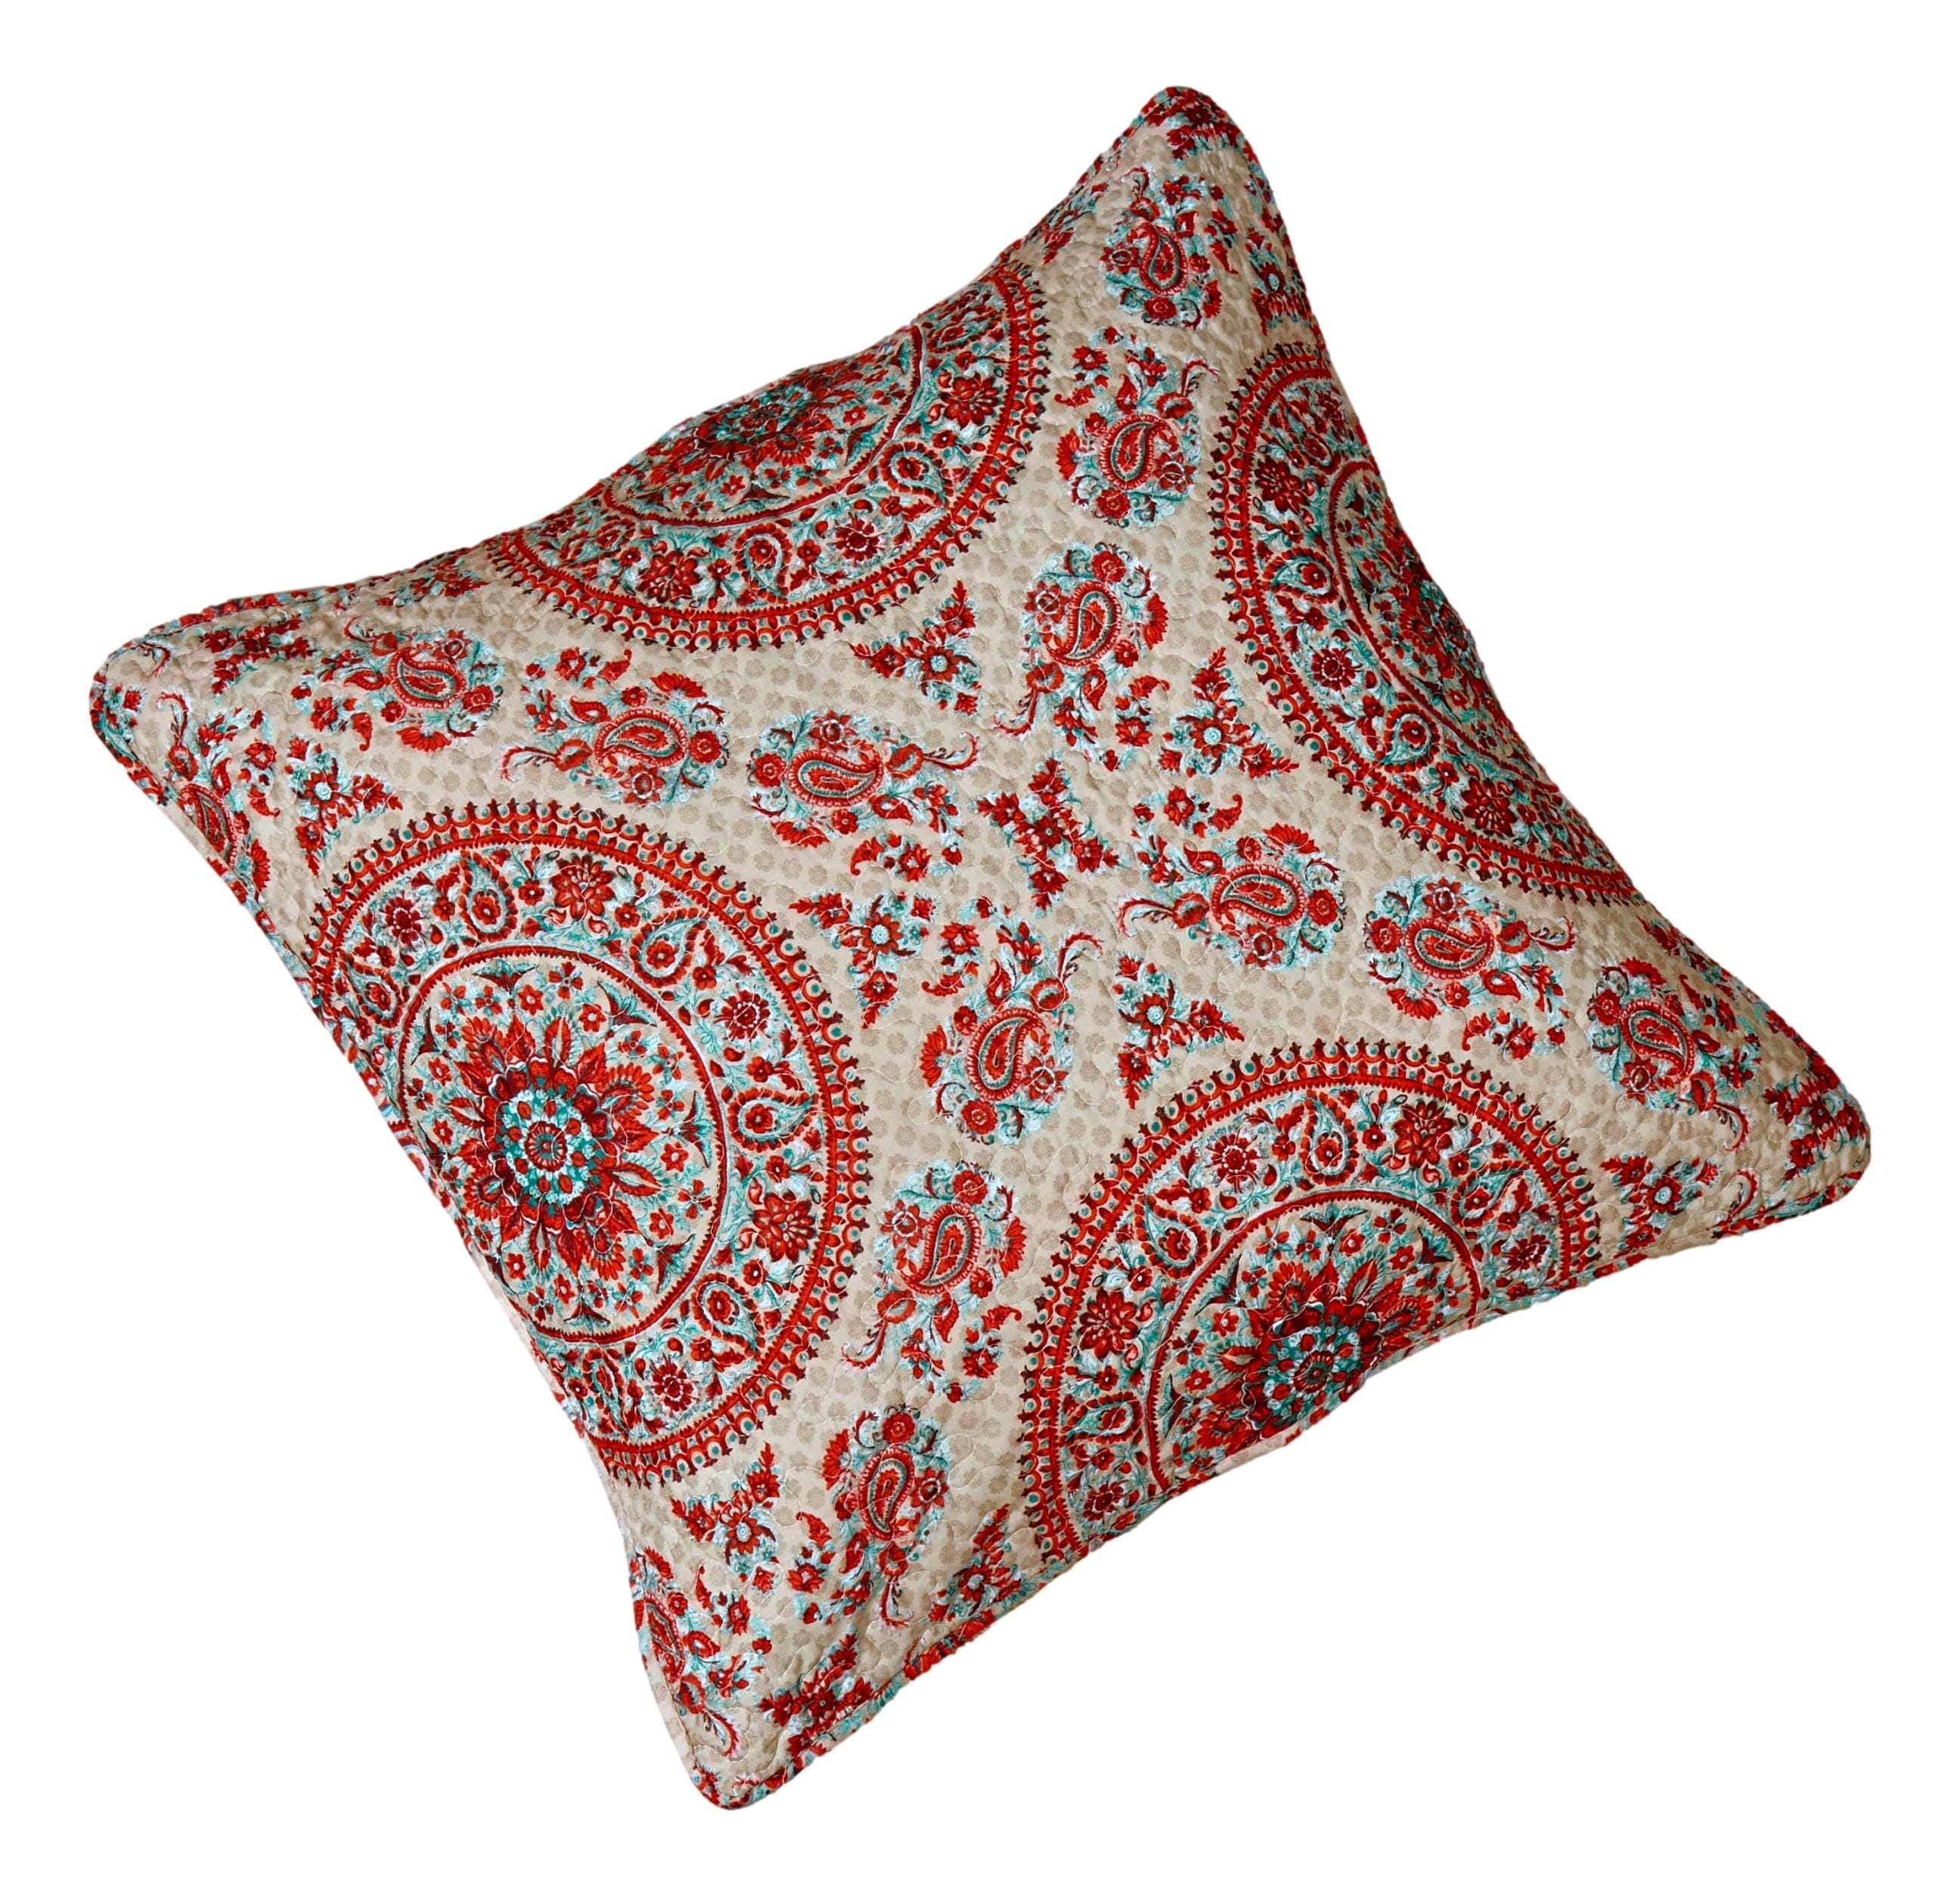 Tache Bohemian Desert Medallion Boteh Paisley Taupe Throw Pillow Covers / Euro Sham (TJ3502) - Tache Home Fashion